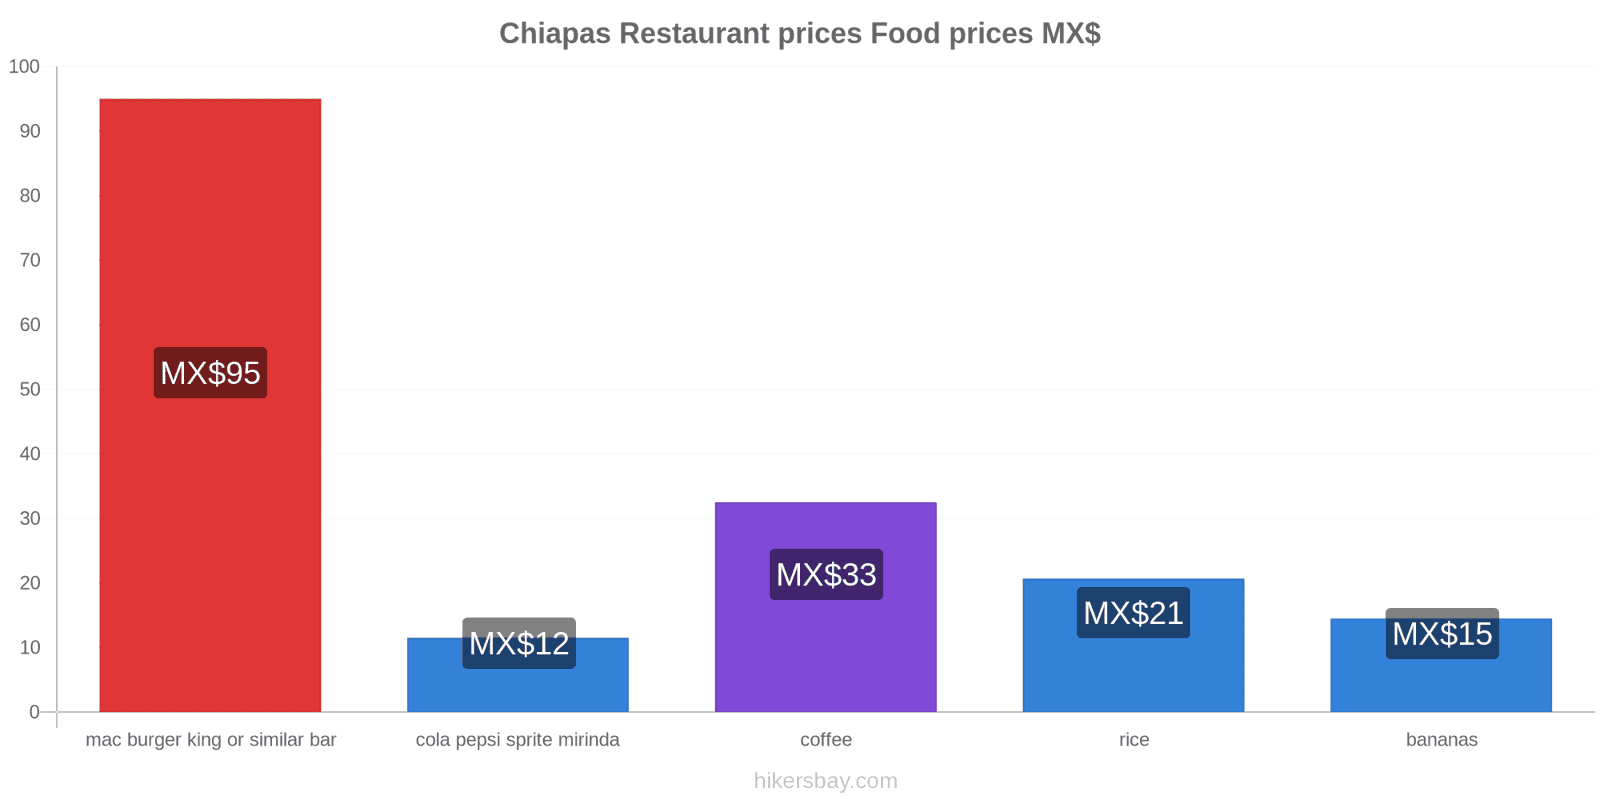 Chiapas price changes hikersbay.com